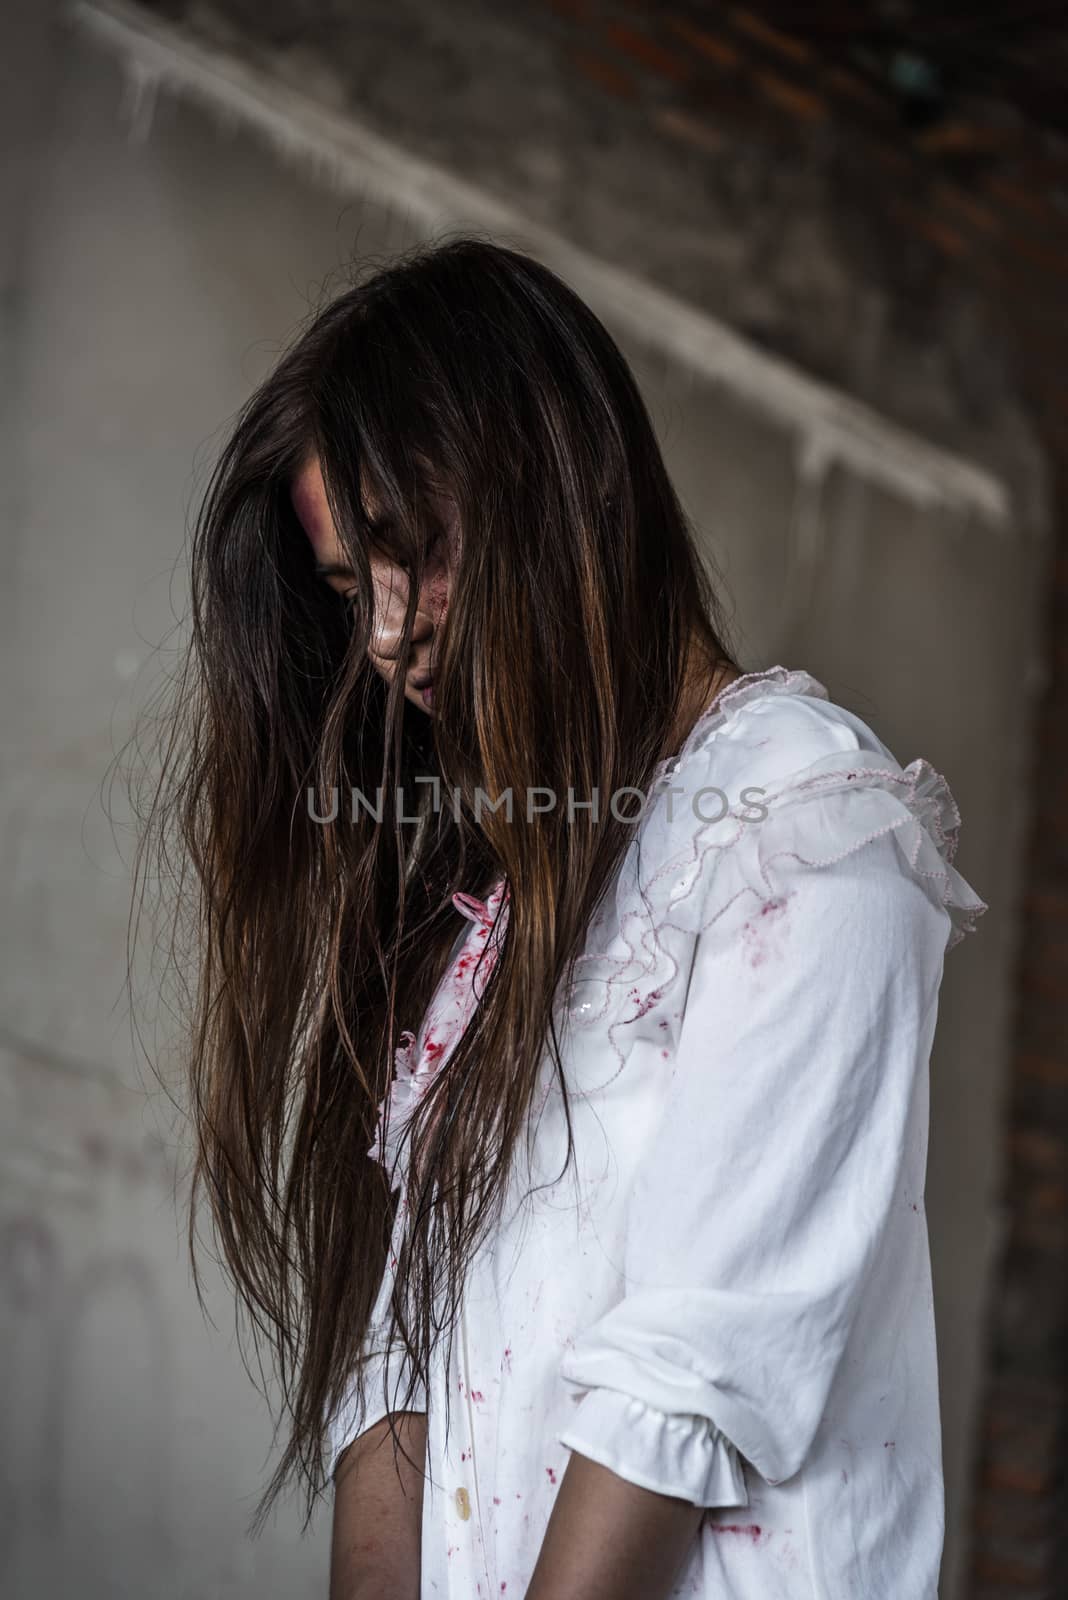 Portrait zombie woman with blood on face by Sorapop